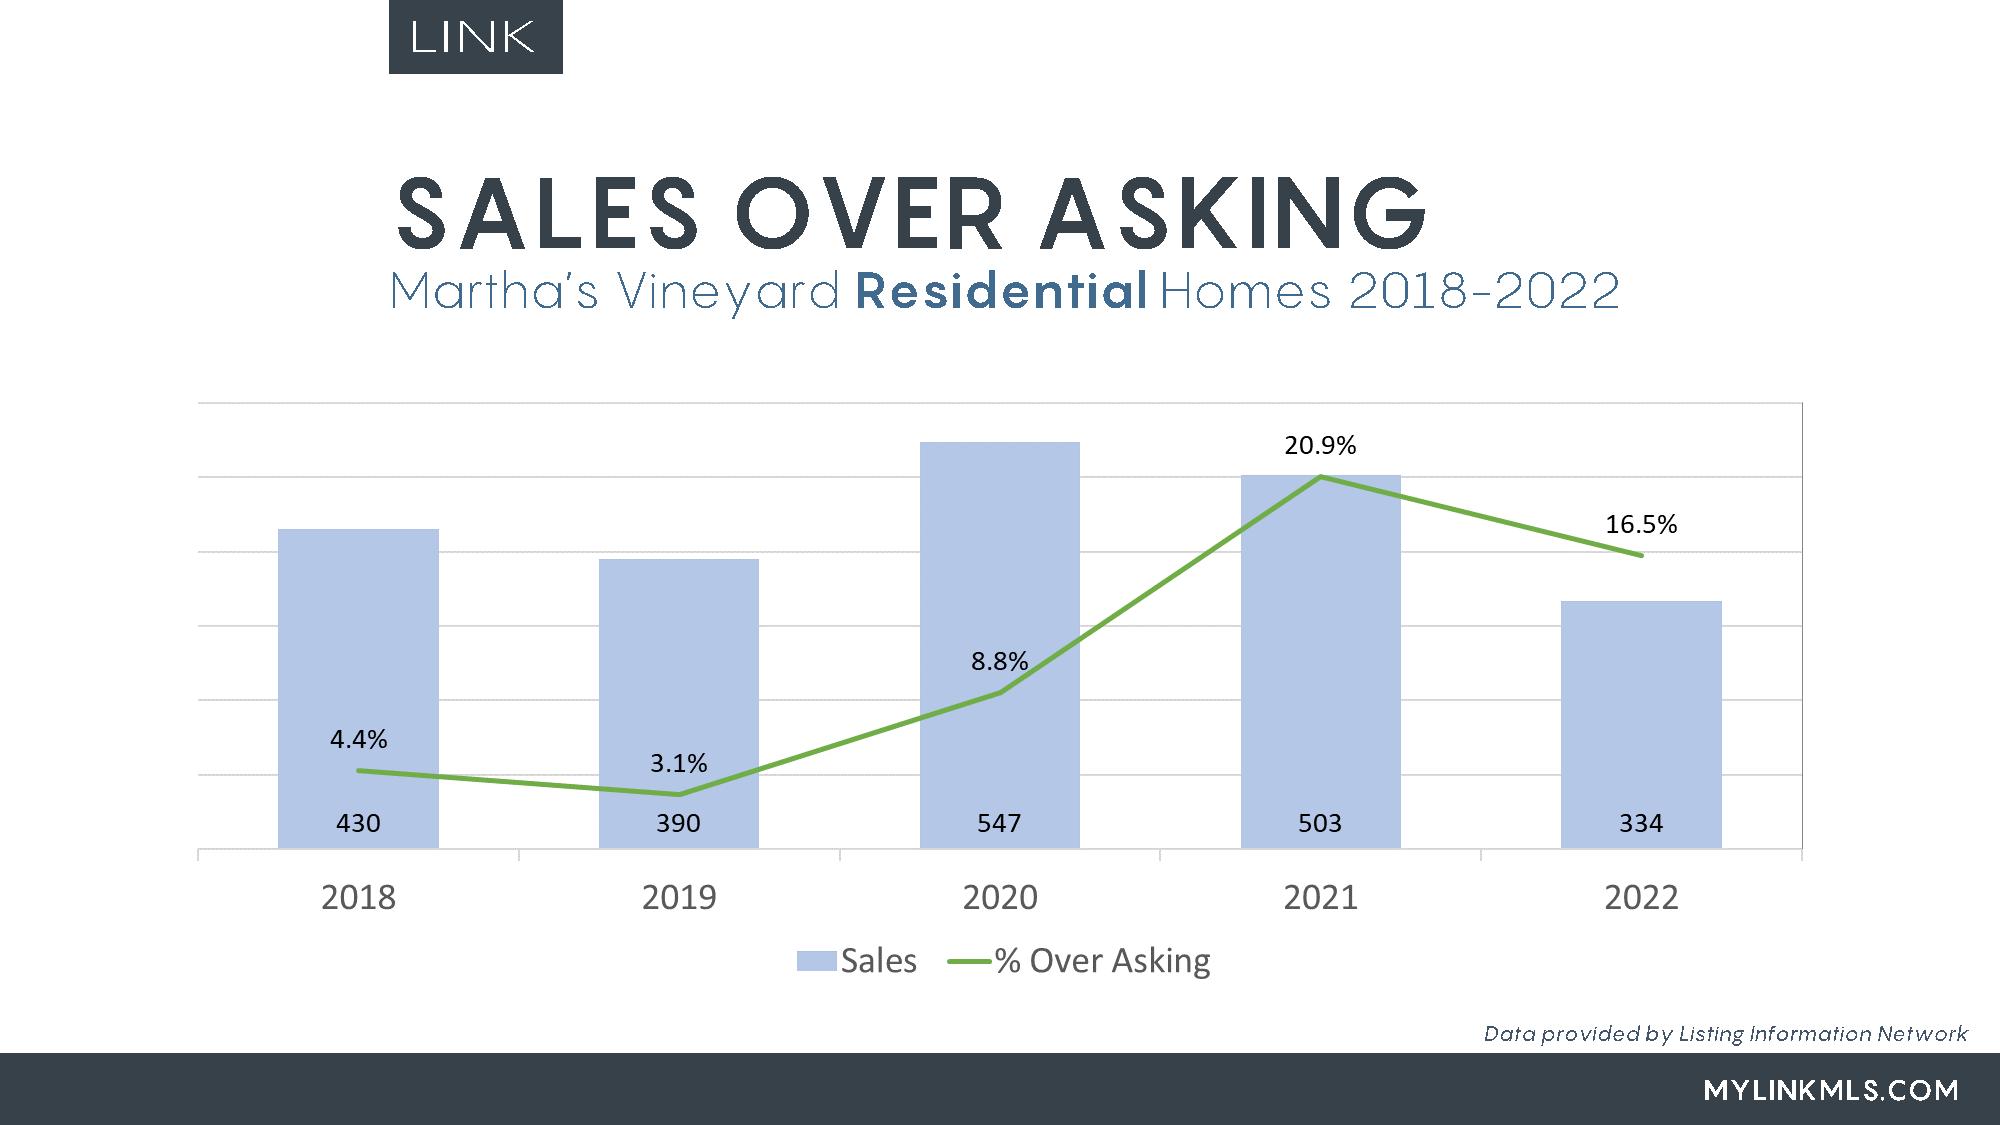 LINK Sales Over Asking 2022